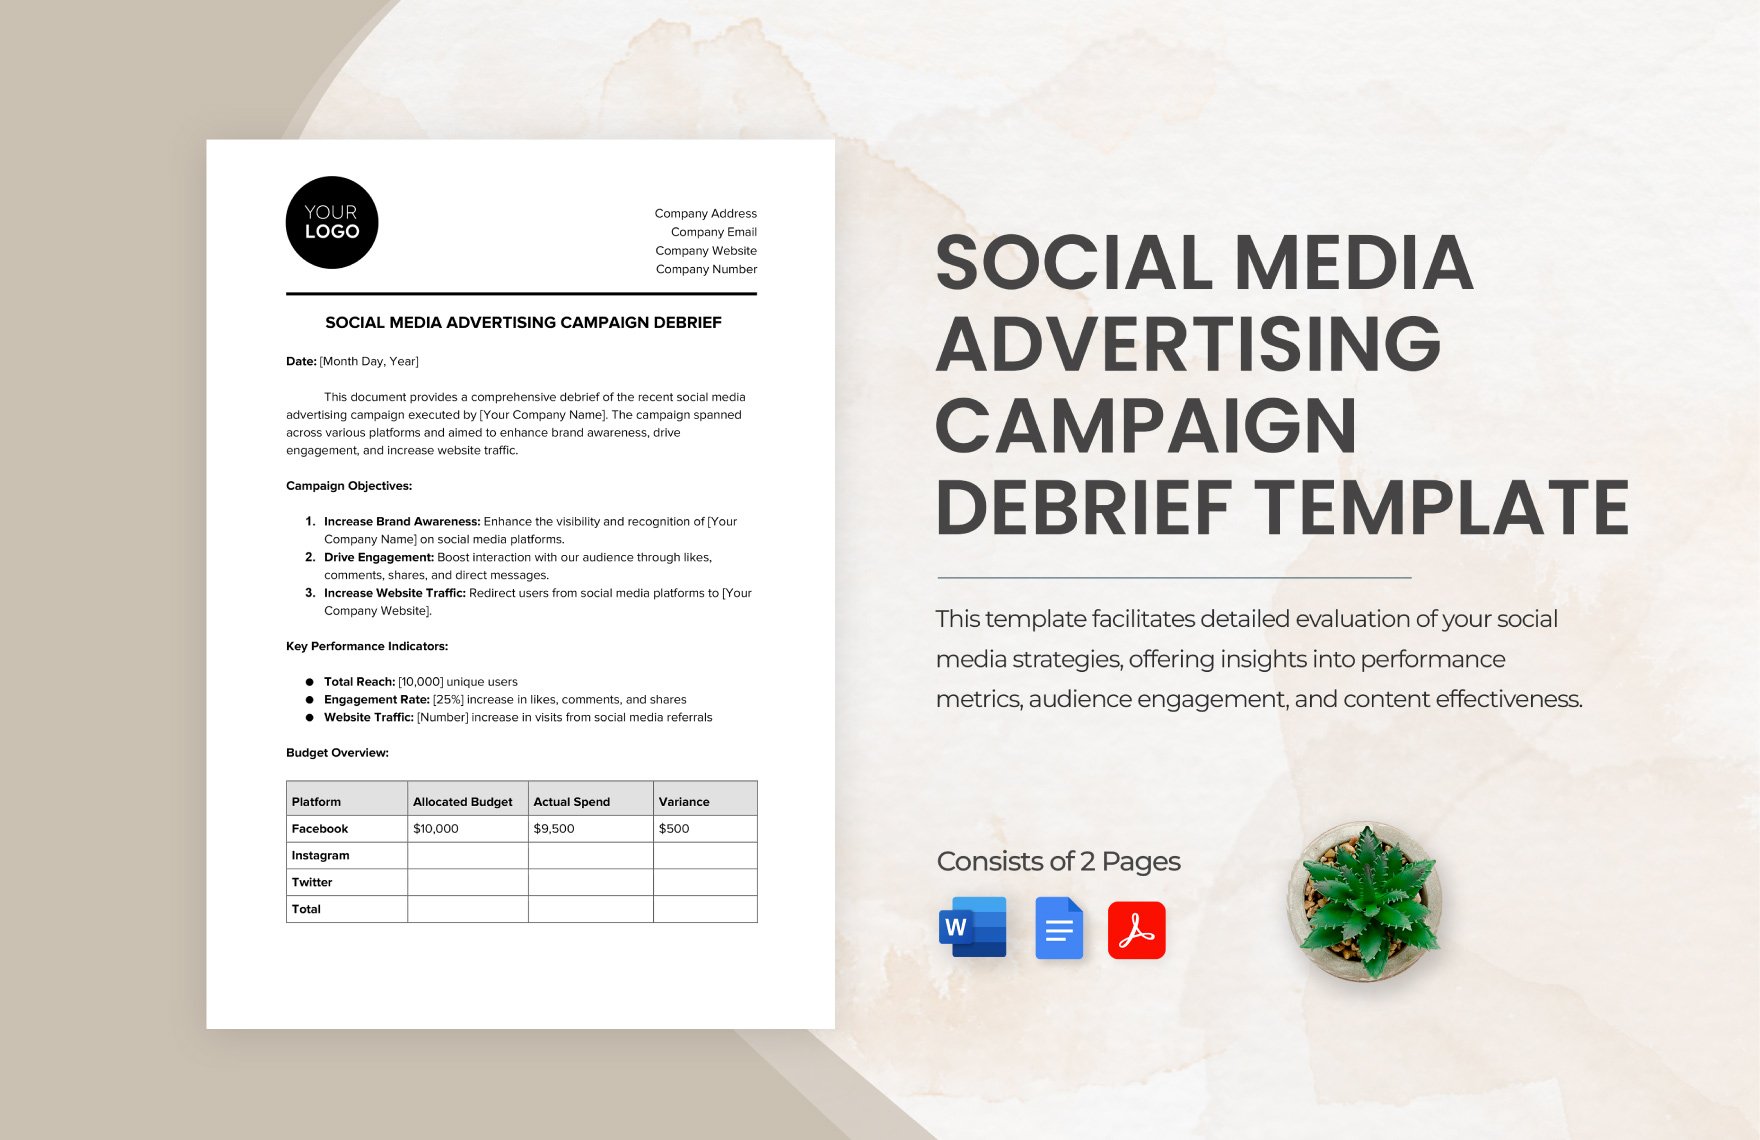 Social Media Advertising Campaign Debrief Template in Word, Google Docs, PDF